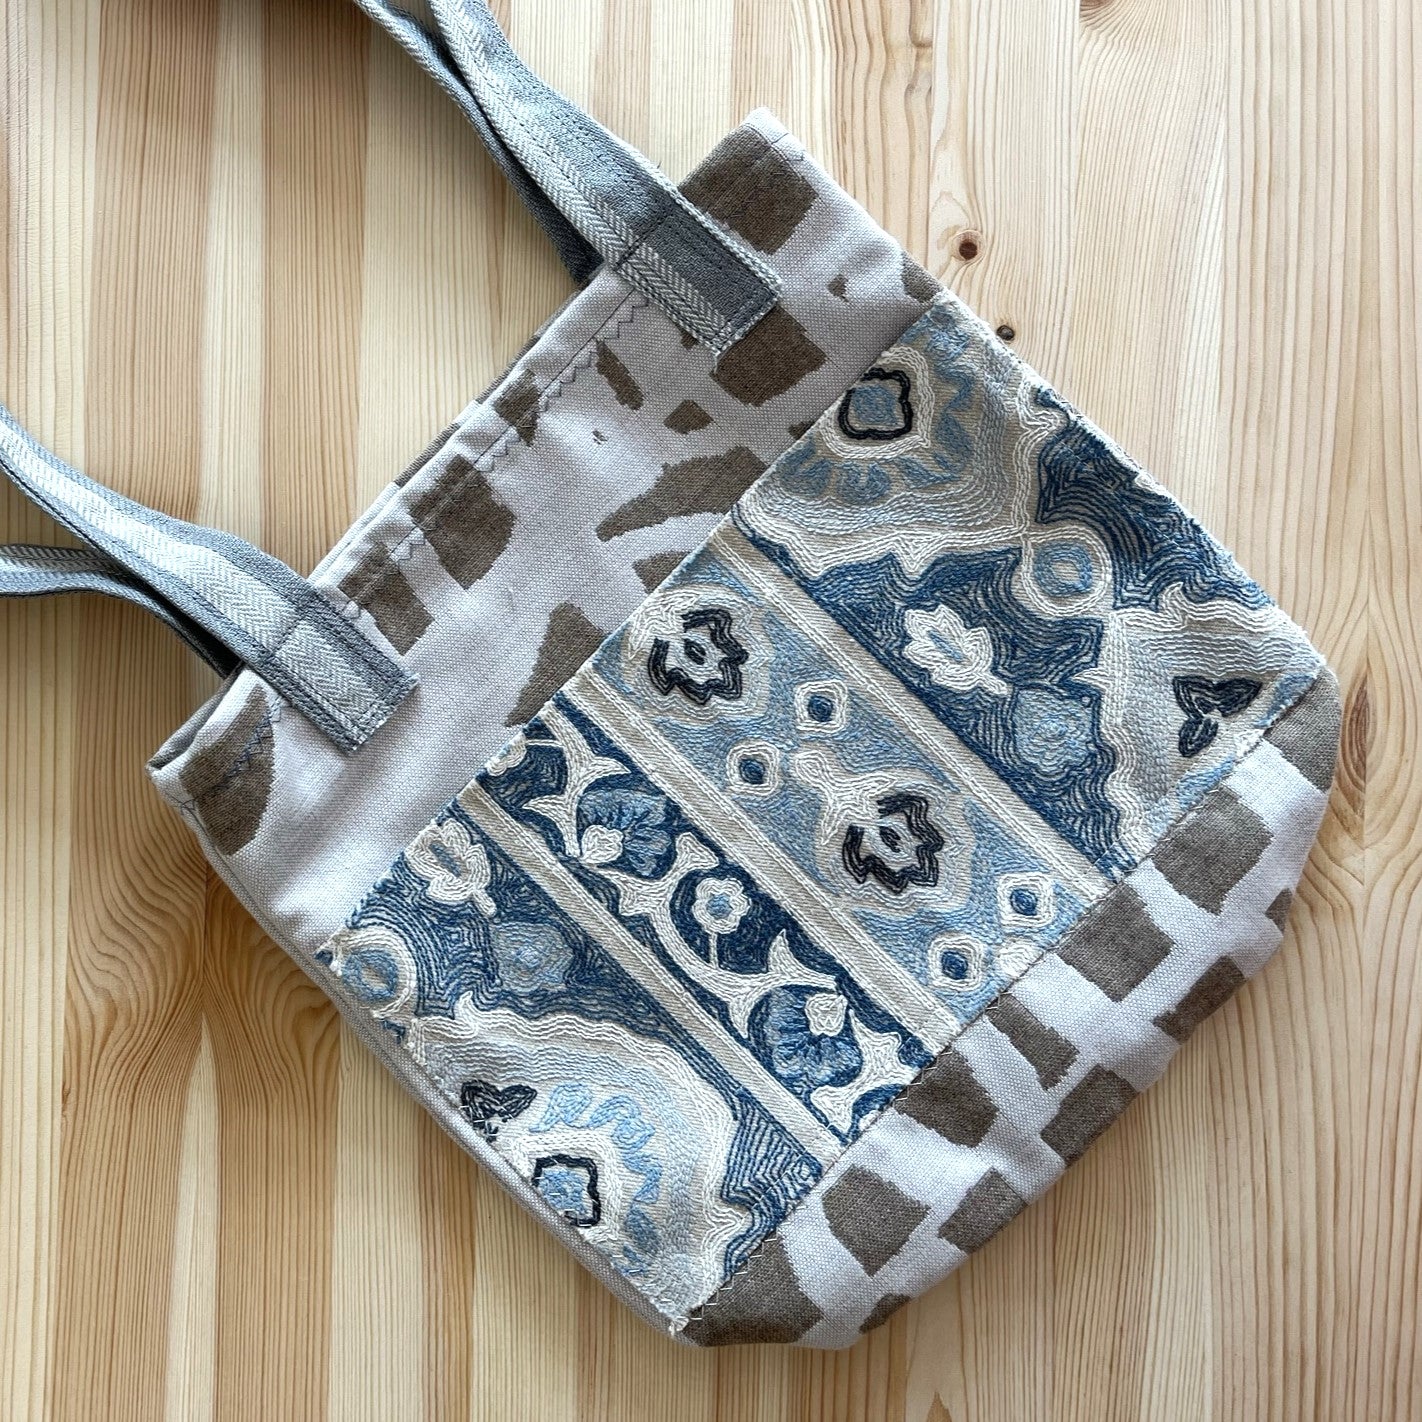 Handmade Tote Bags - Small